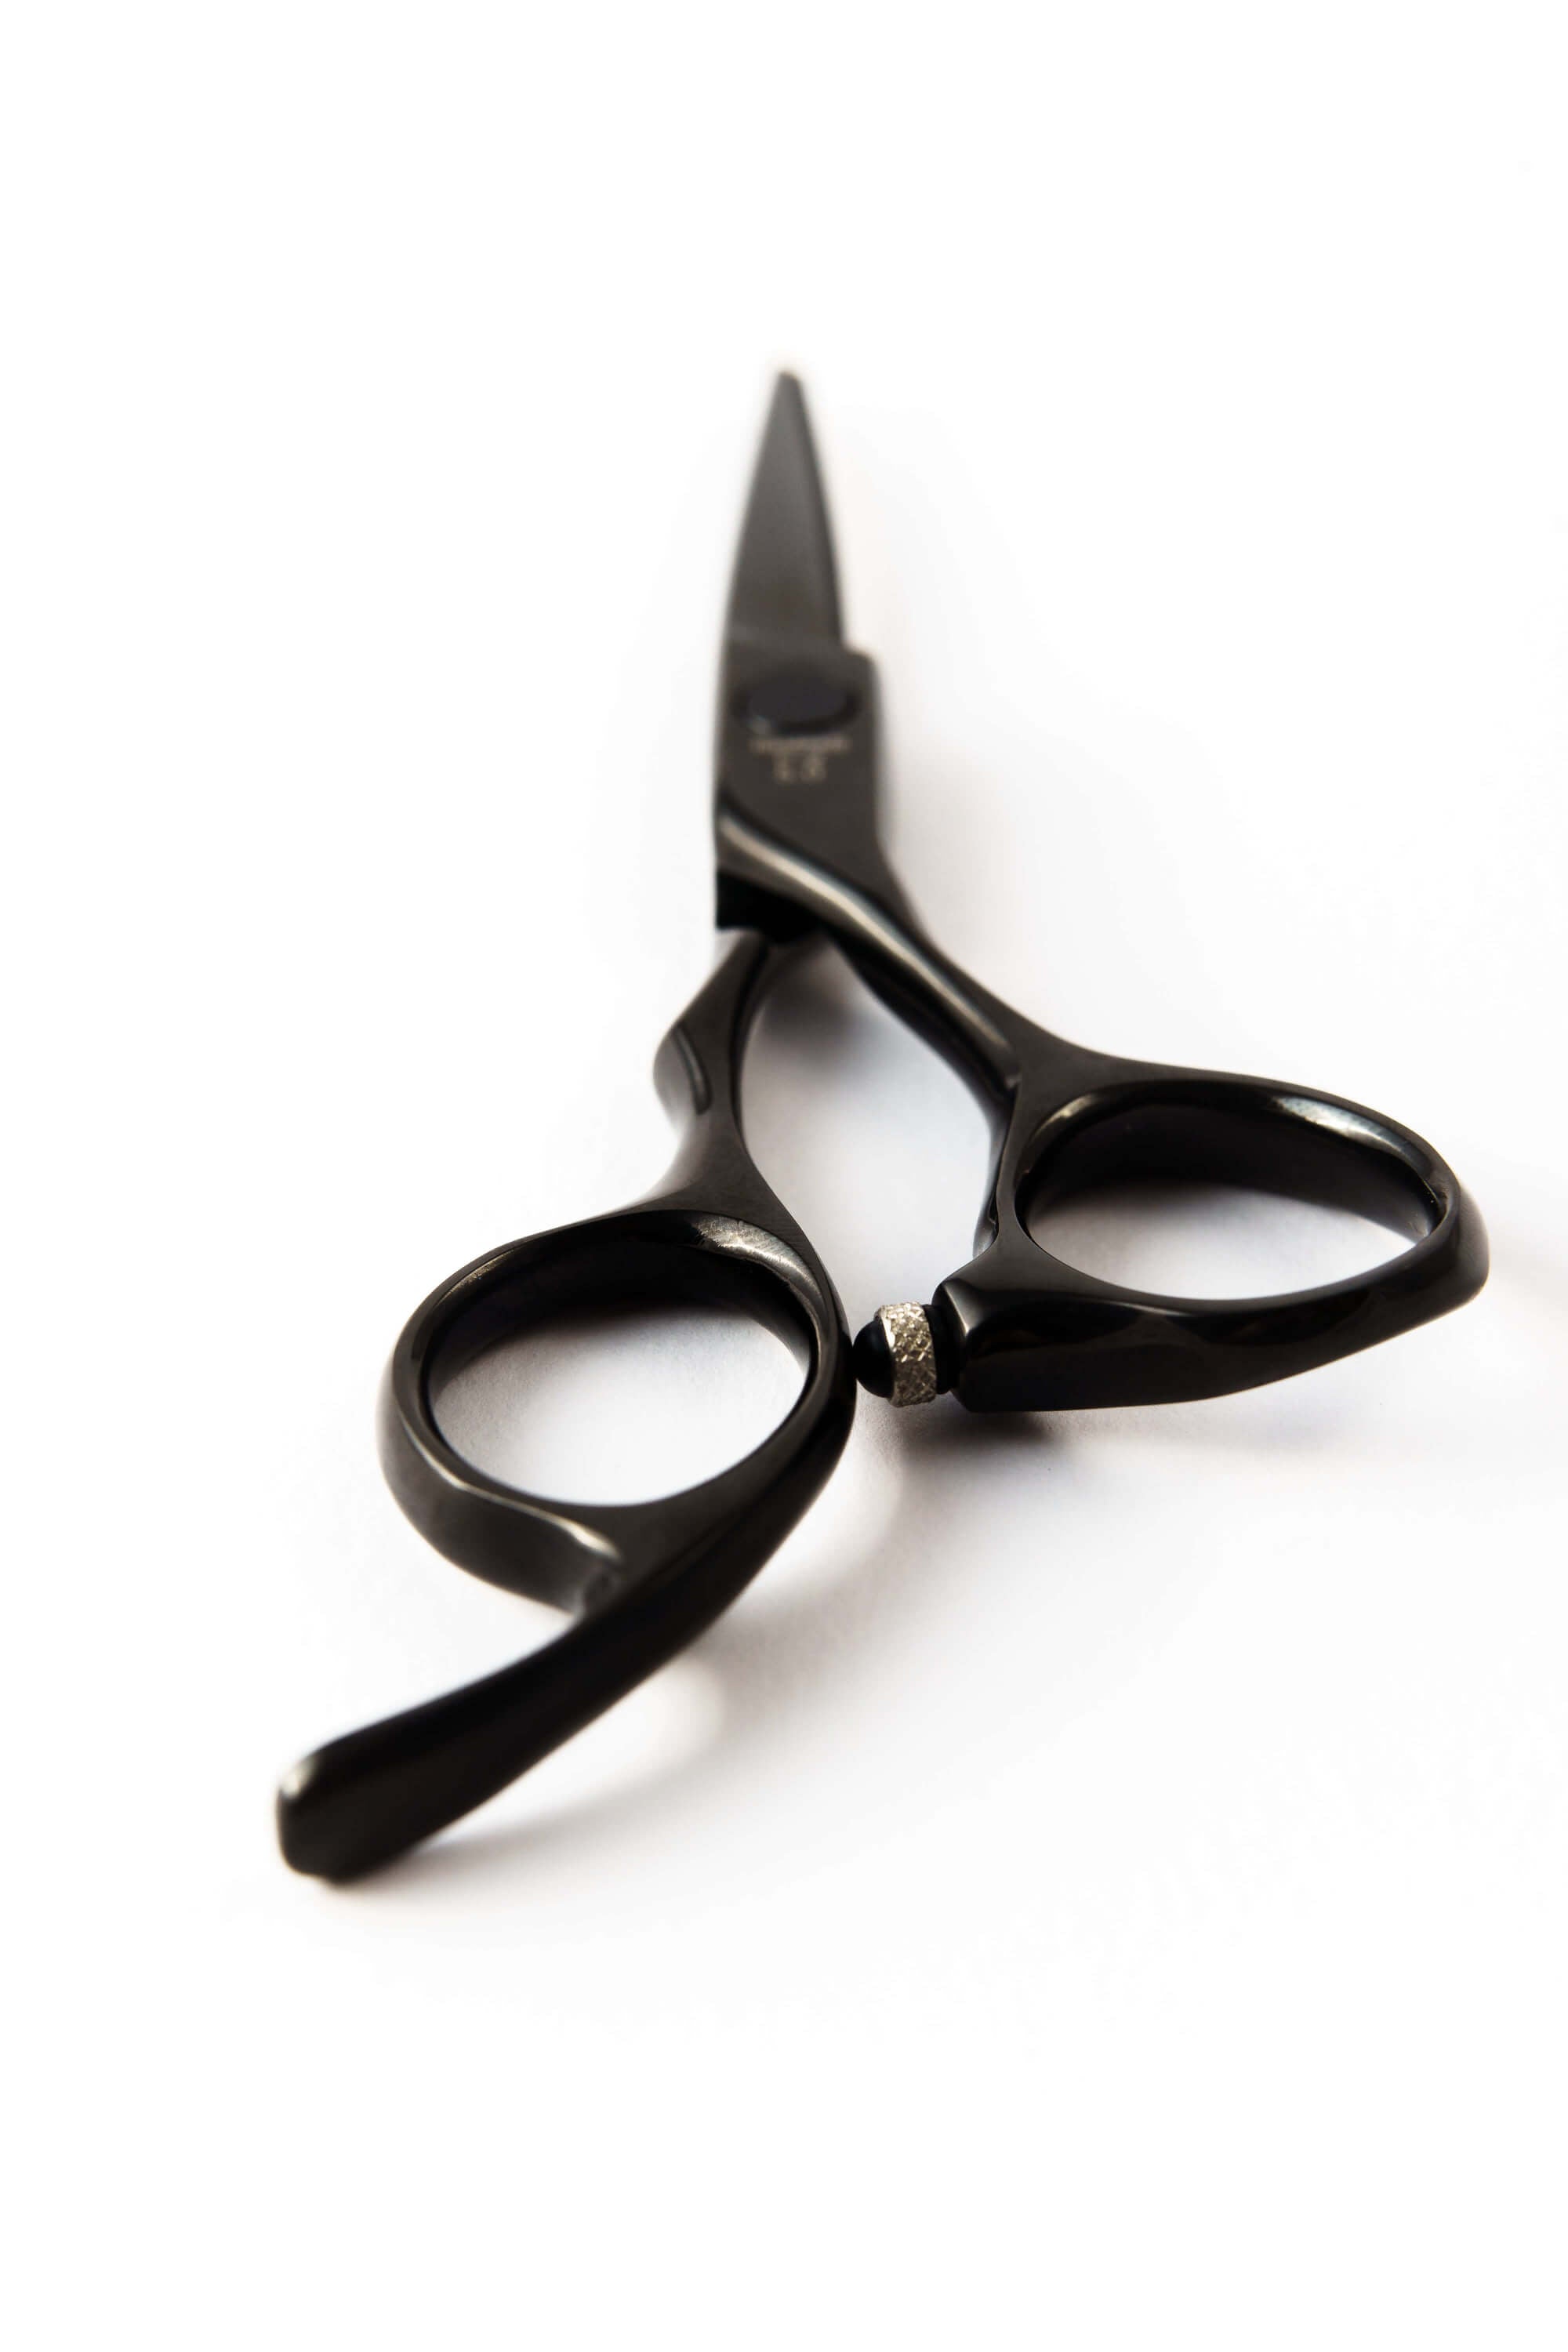 Shop Professional Japanese Hair Cutting Scissors - Akito Scissors